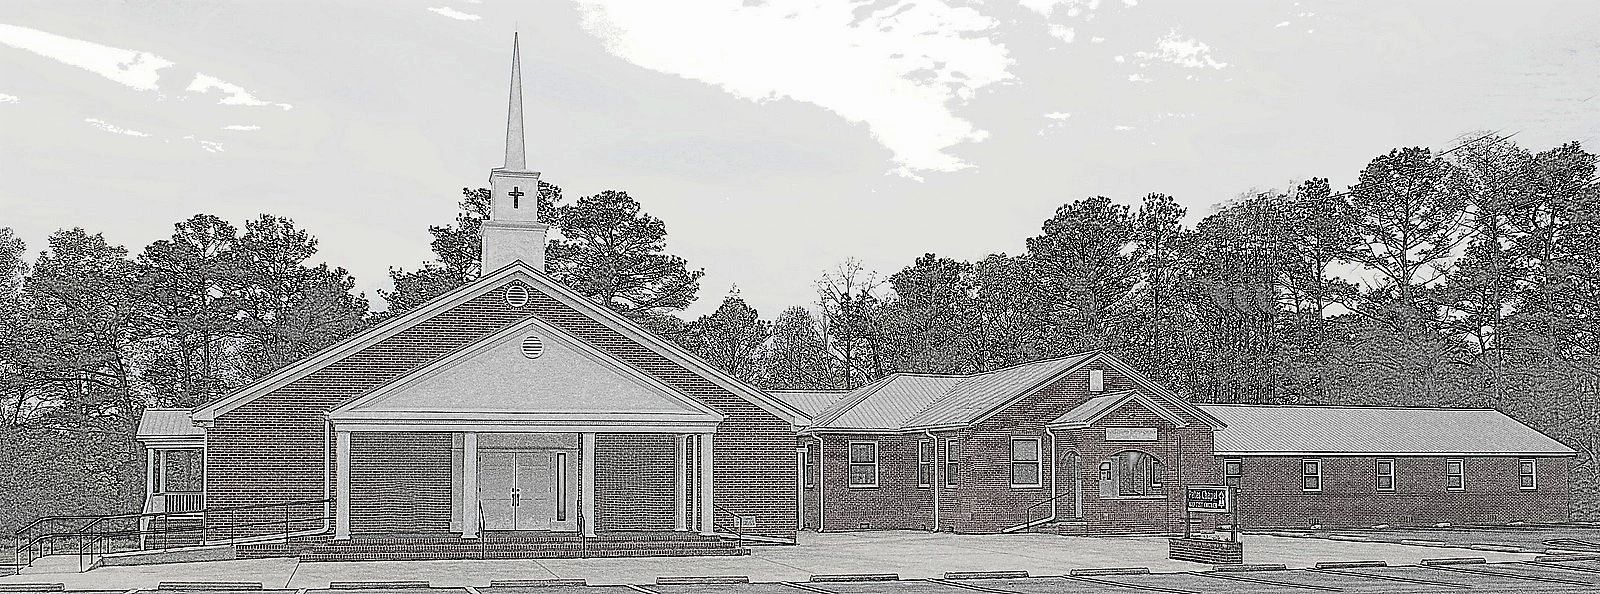 Pate's Chapel Baptist Church